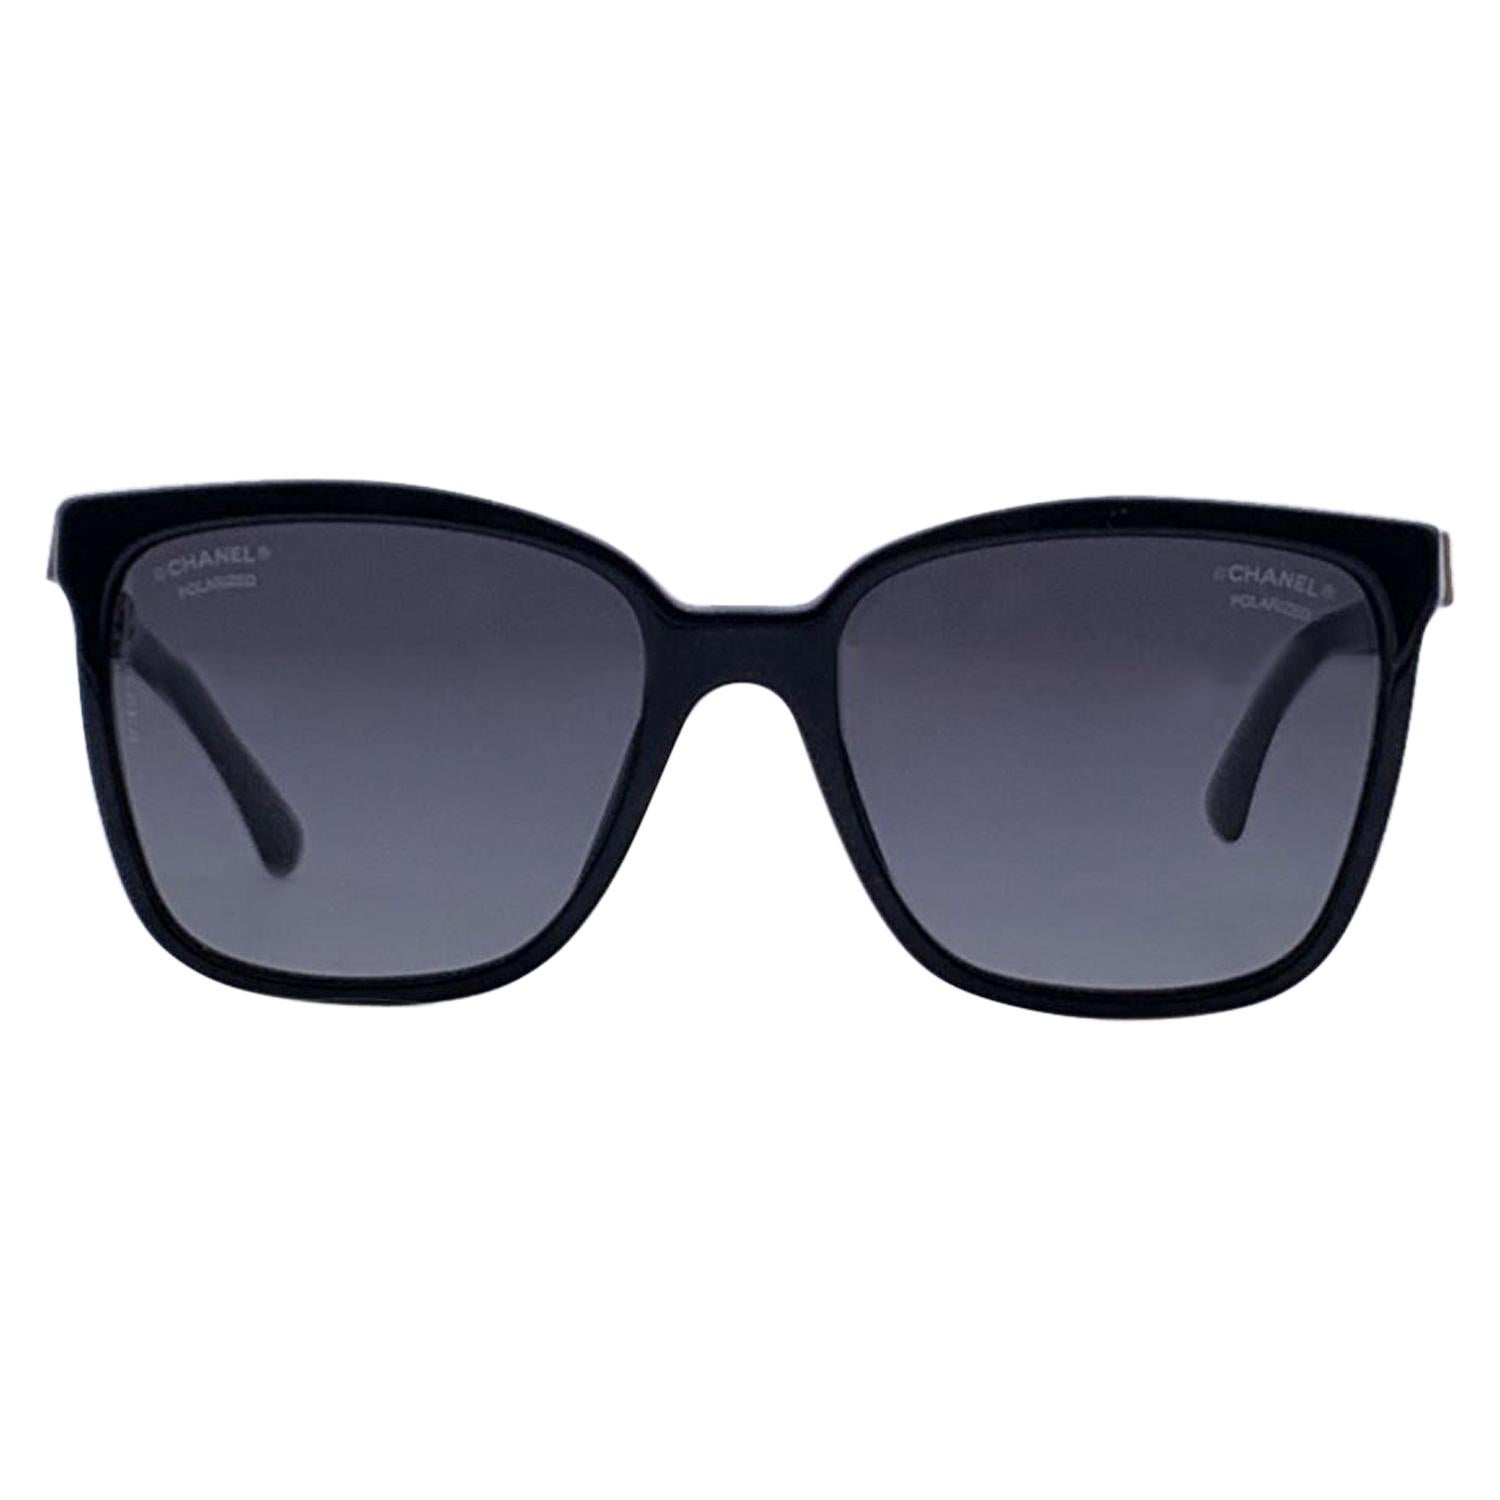 Chanel Black Acetate 5325 Polarized Sunglasses 54/17 140mm